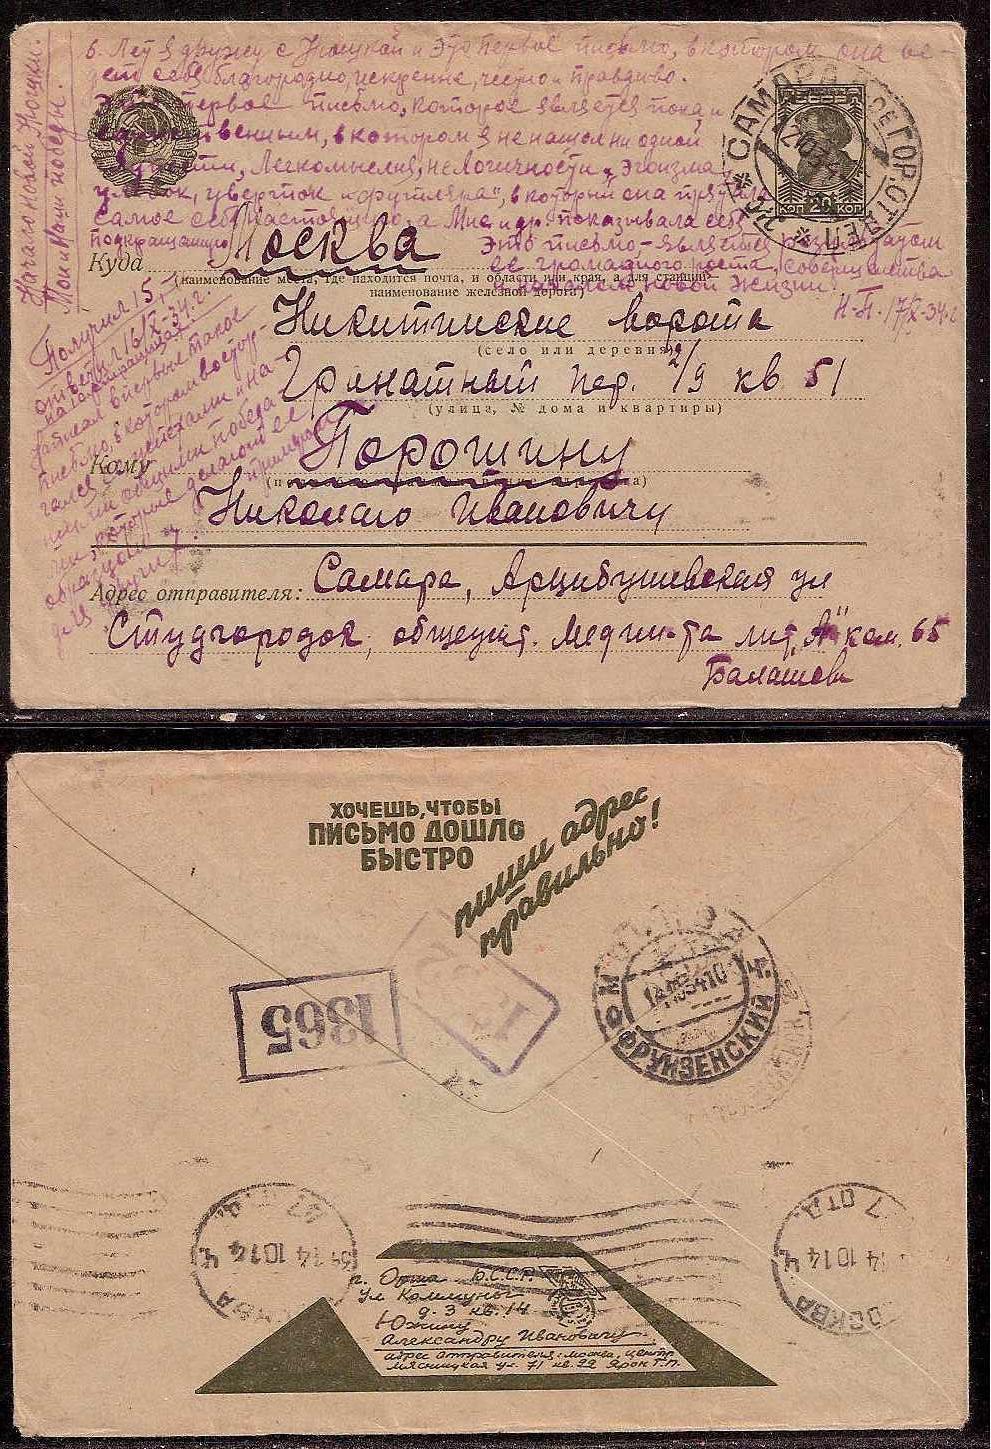 Russia Postal History - Gubernia Samara gubernia Scott 501934 